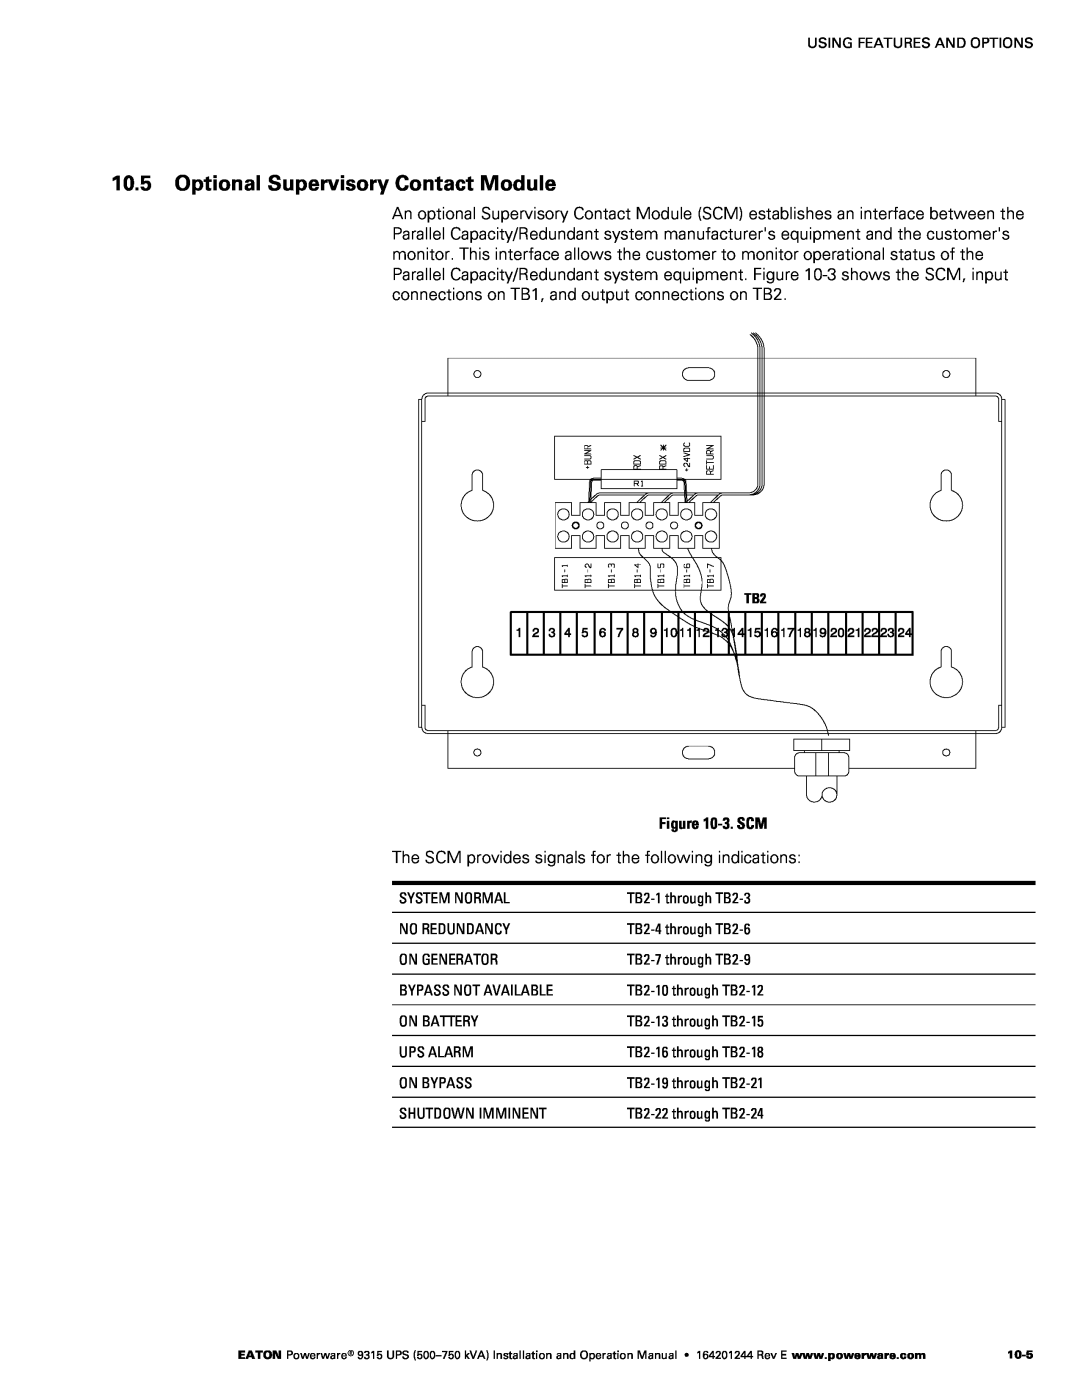 Powerware Powerware 9315 operation manual Optional Supervisory Contact Module 